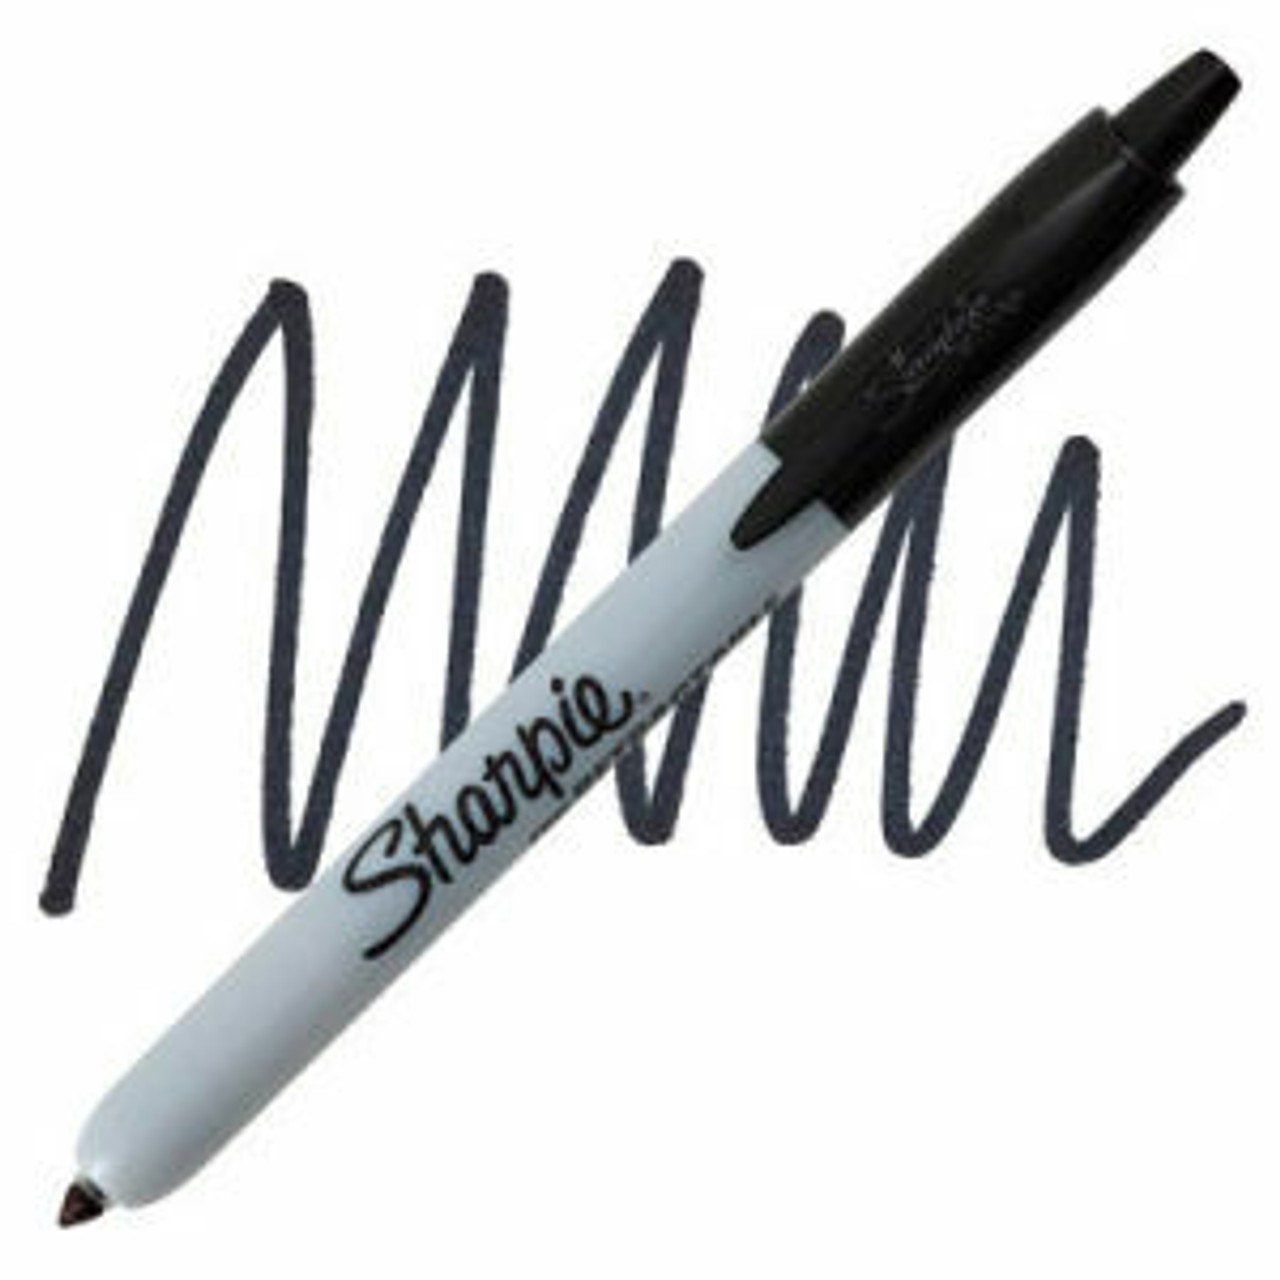 Art Supplies - Pens & Markers - Sharpie - Sam Flax Atlanta